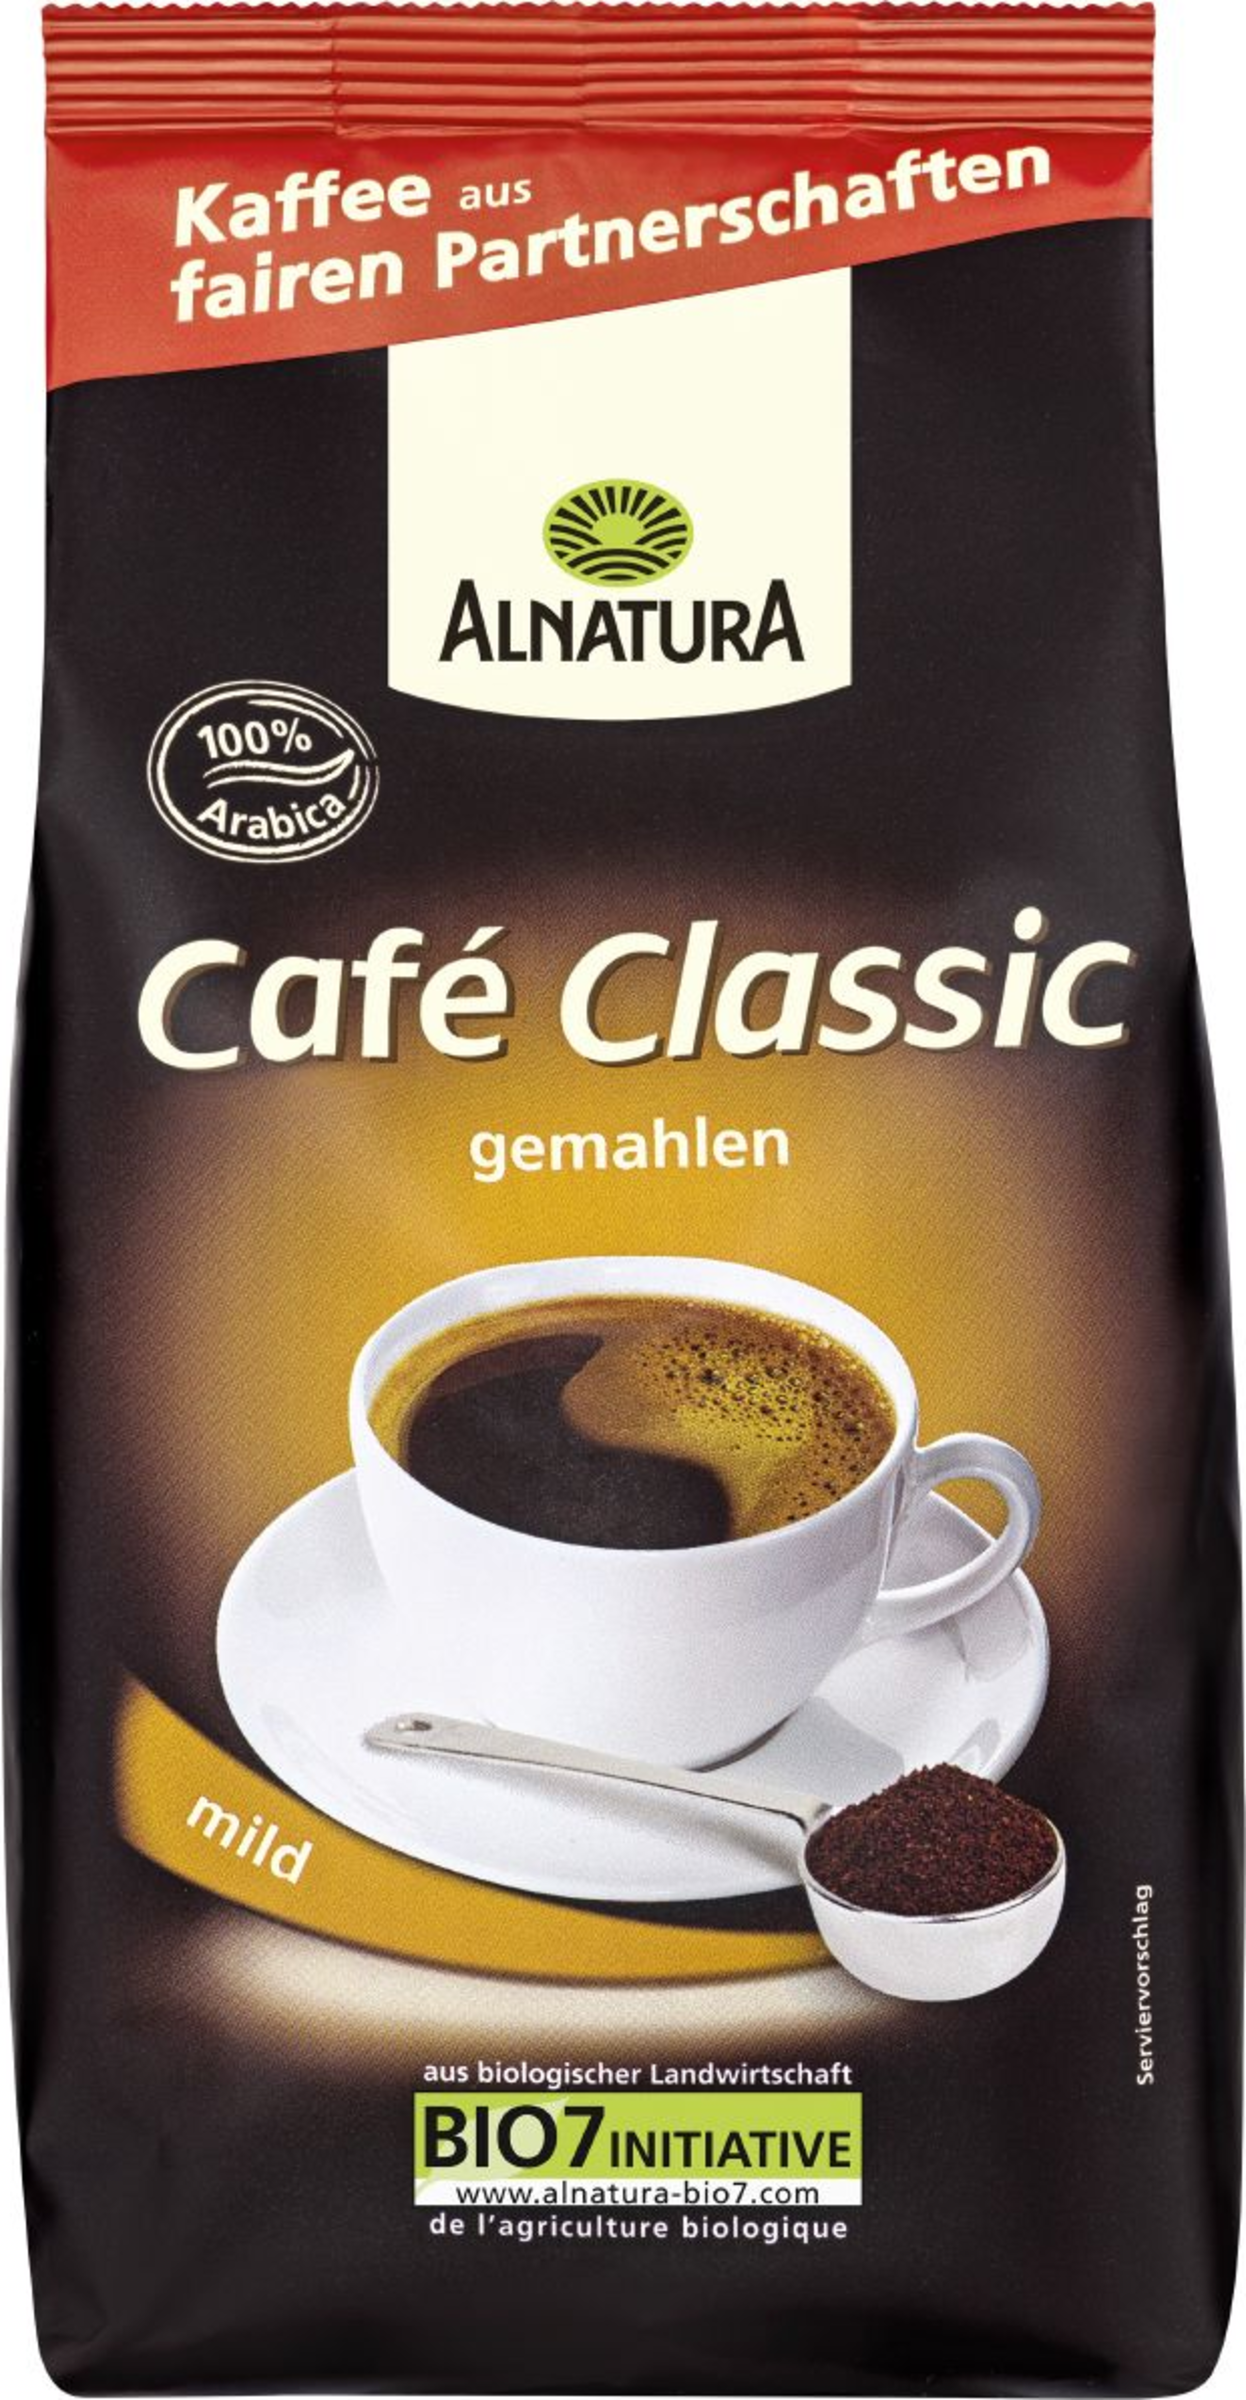 Organic café classic